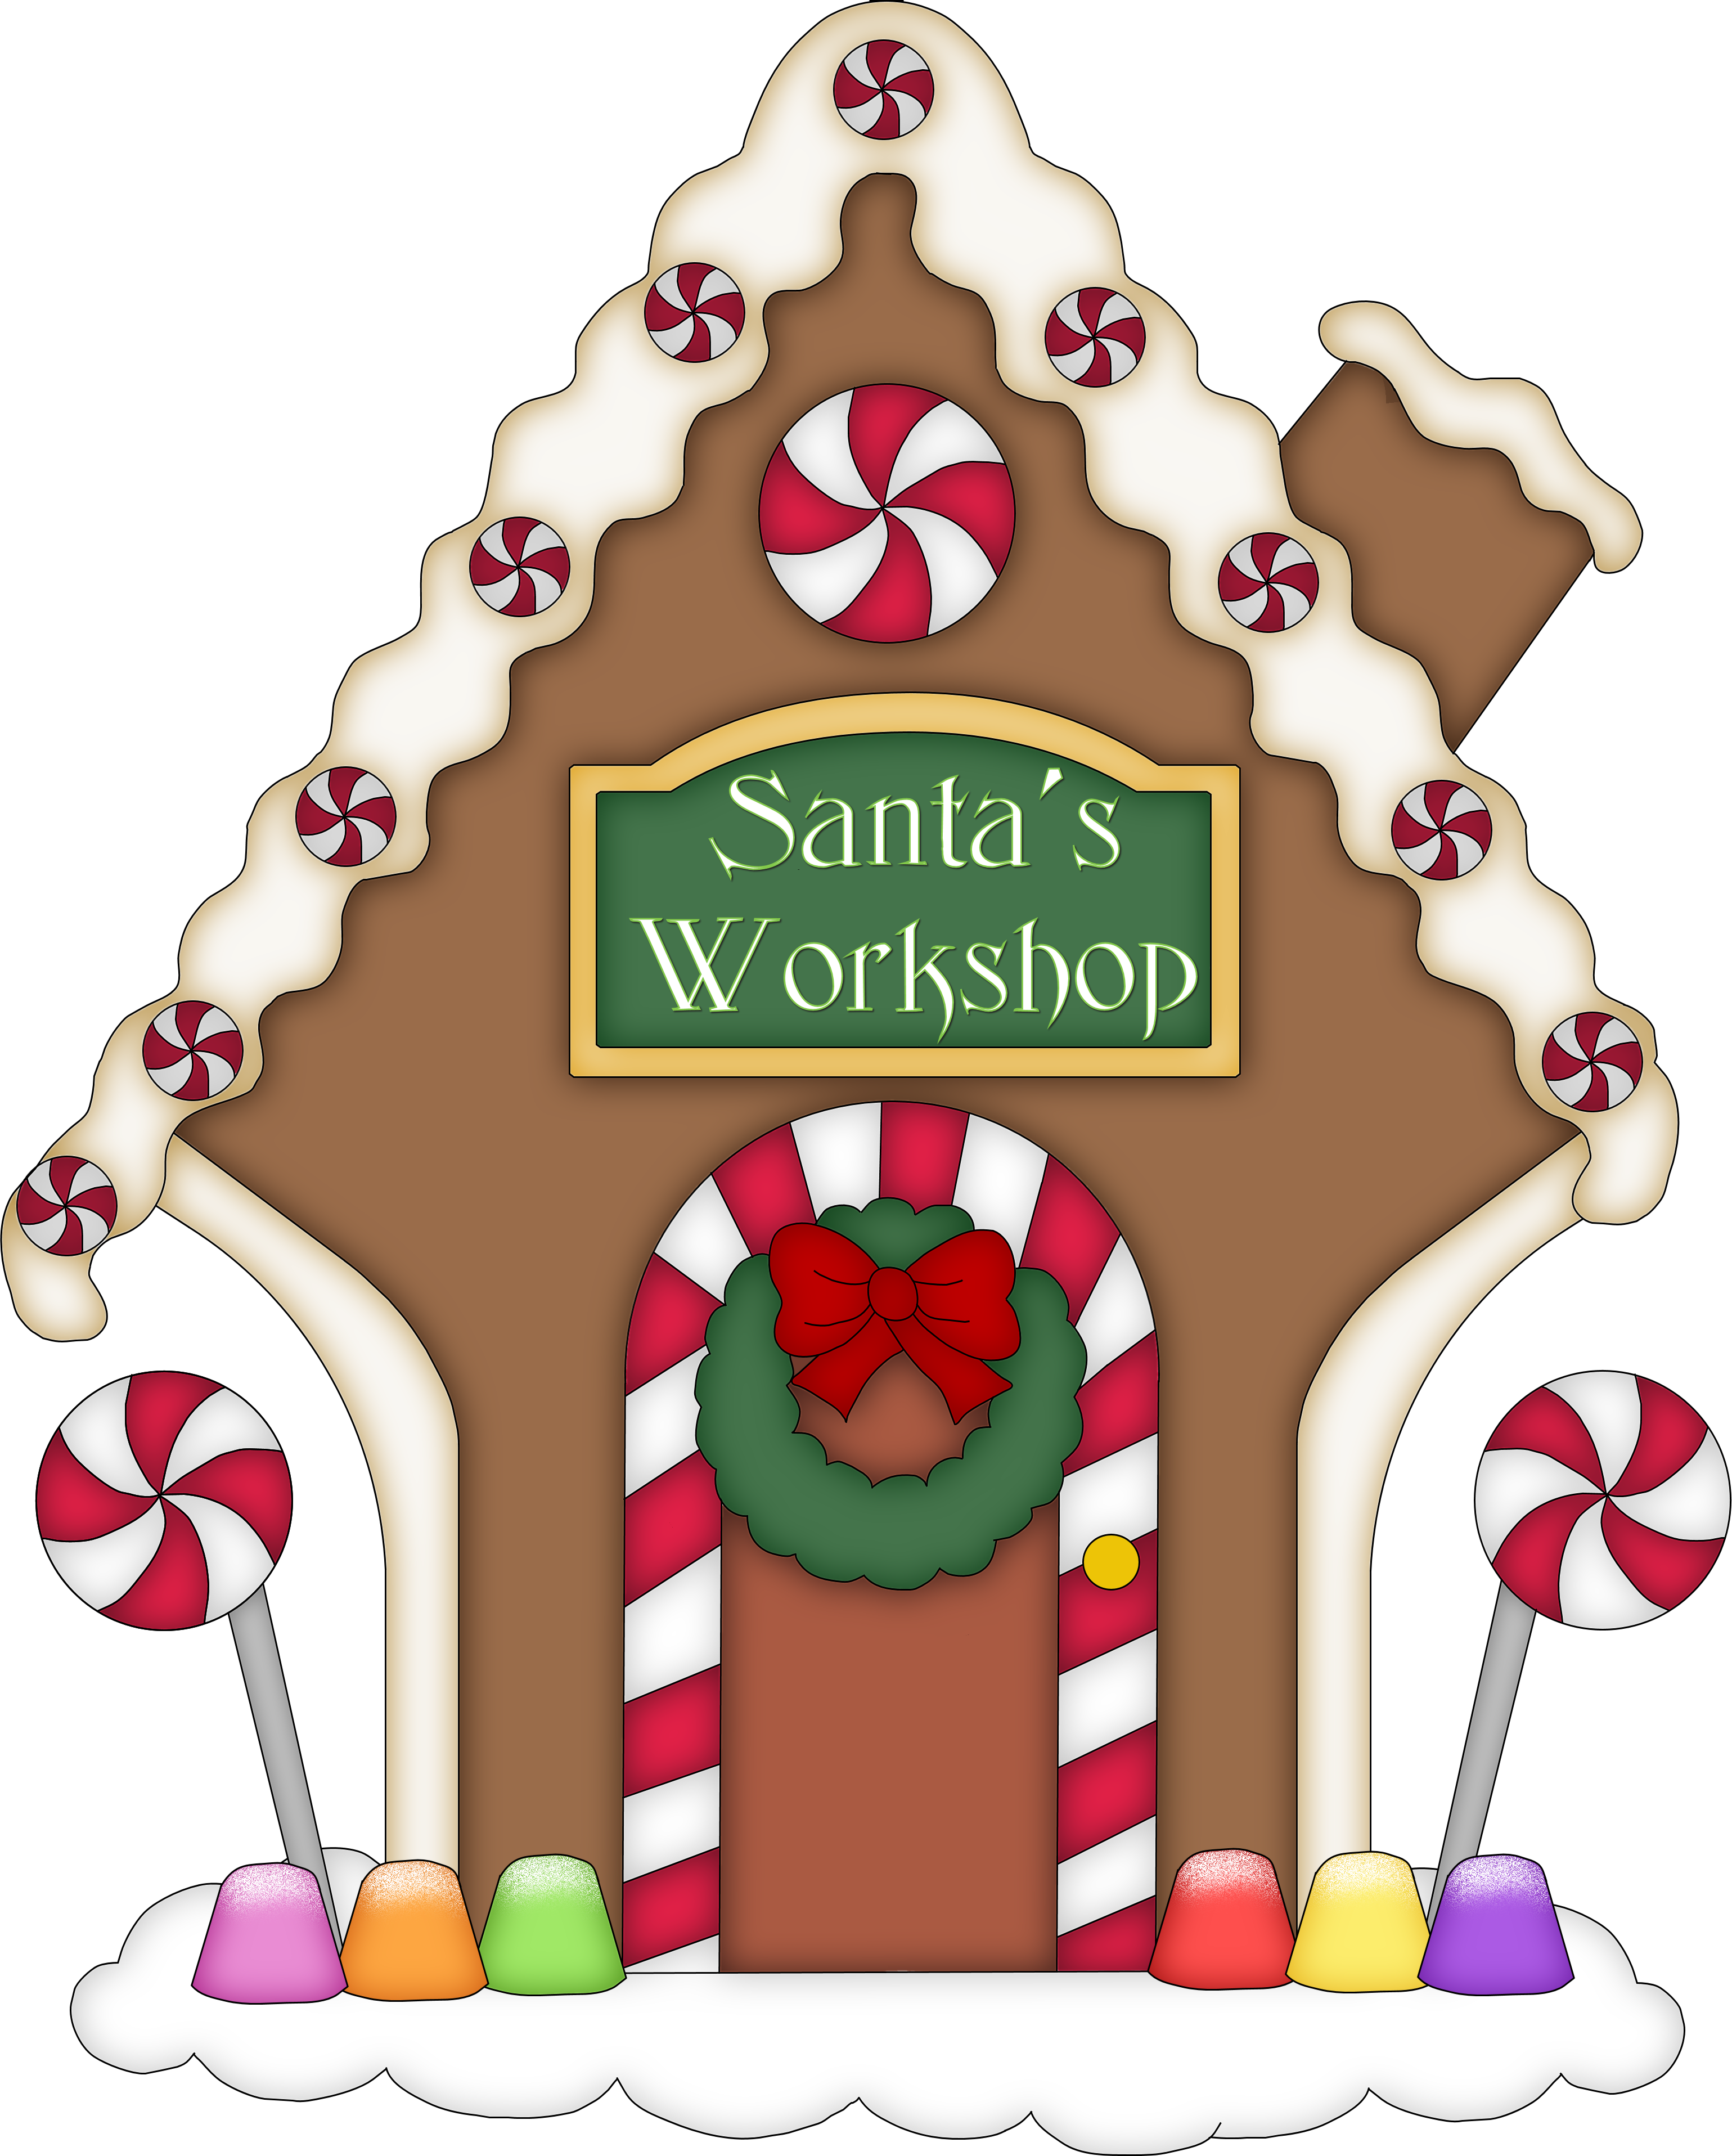 Gingerbread house clip art. Grinch clipart outfit santa